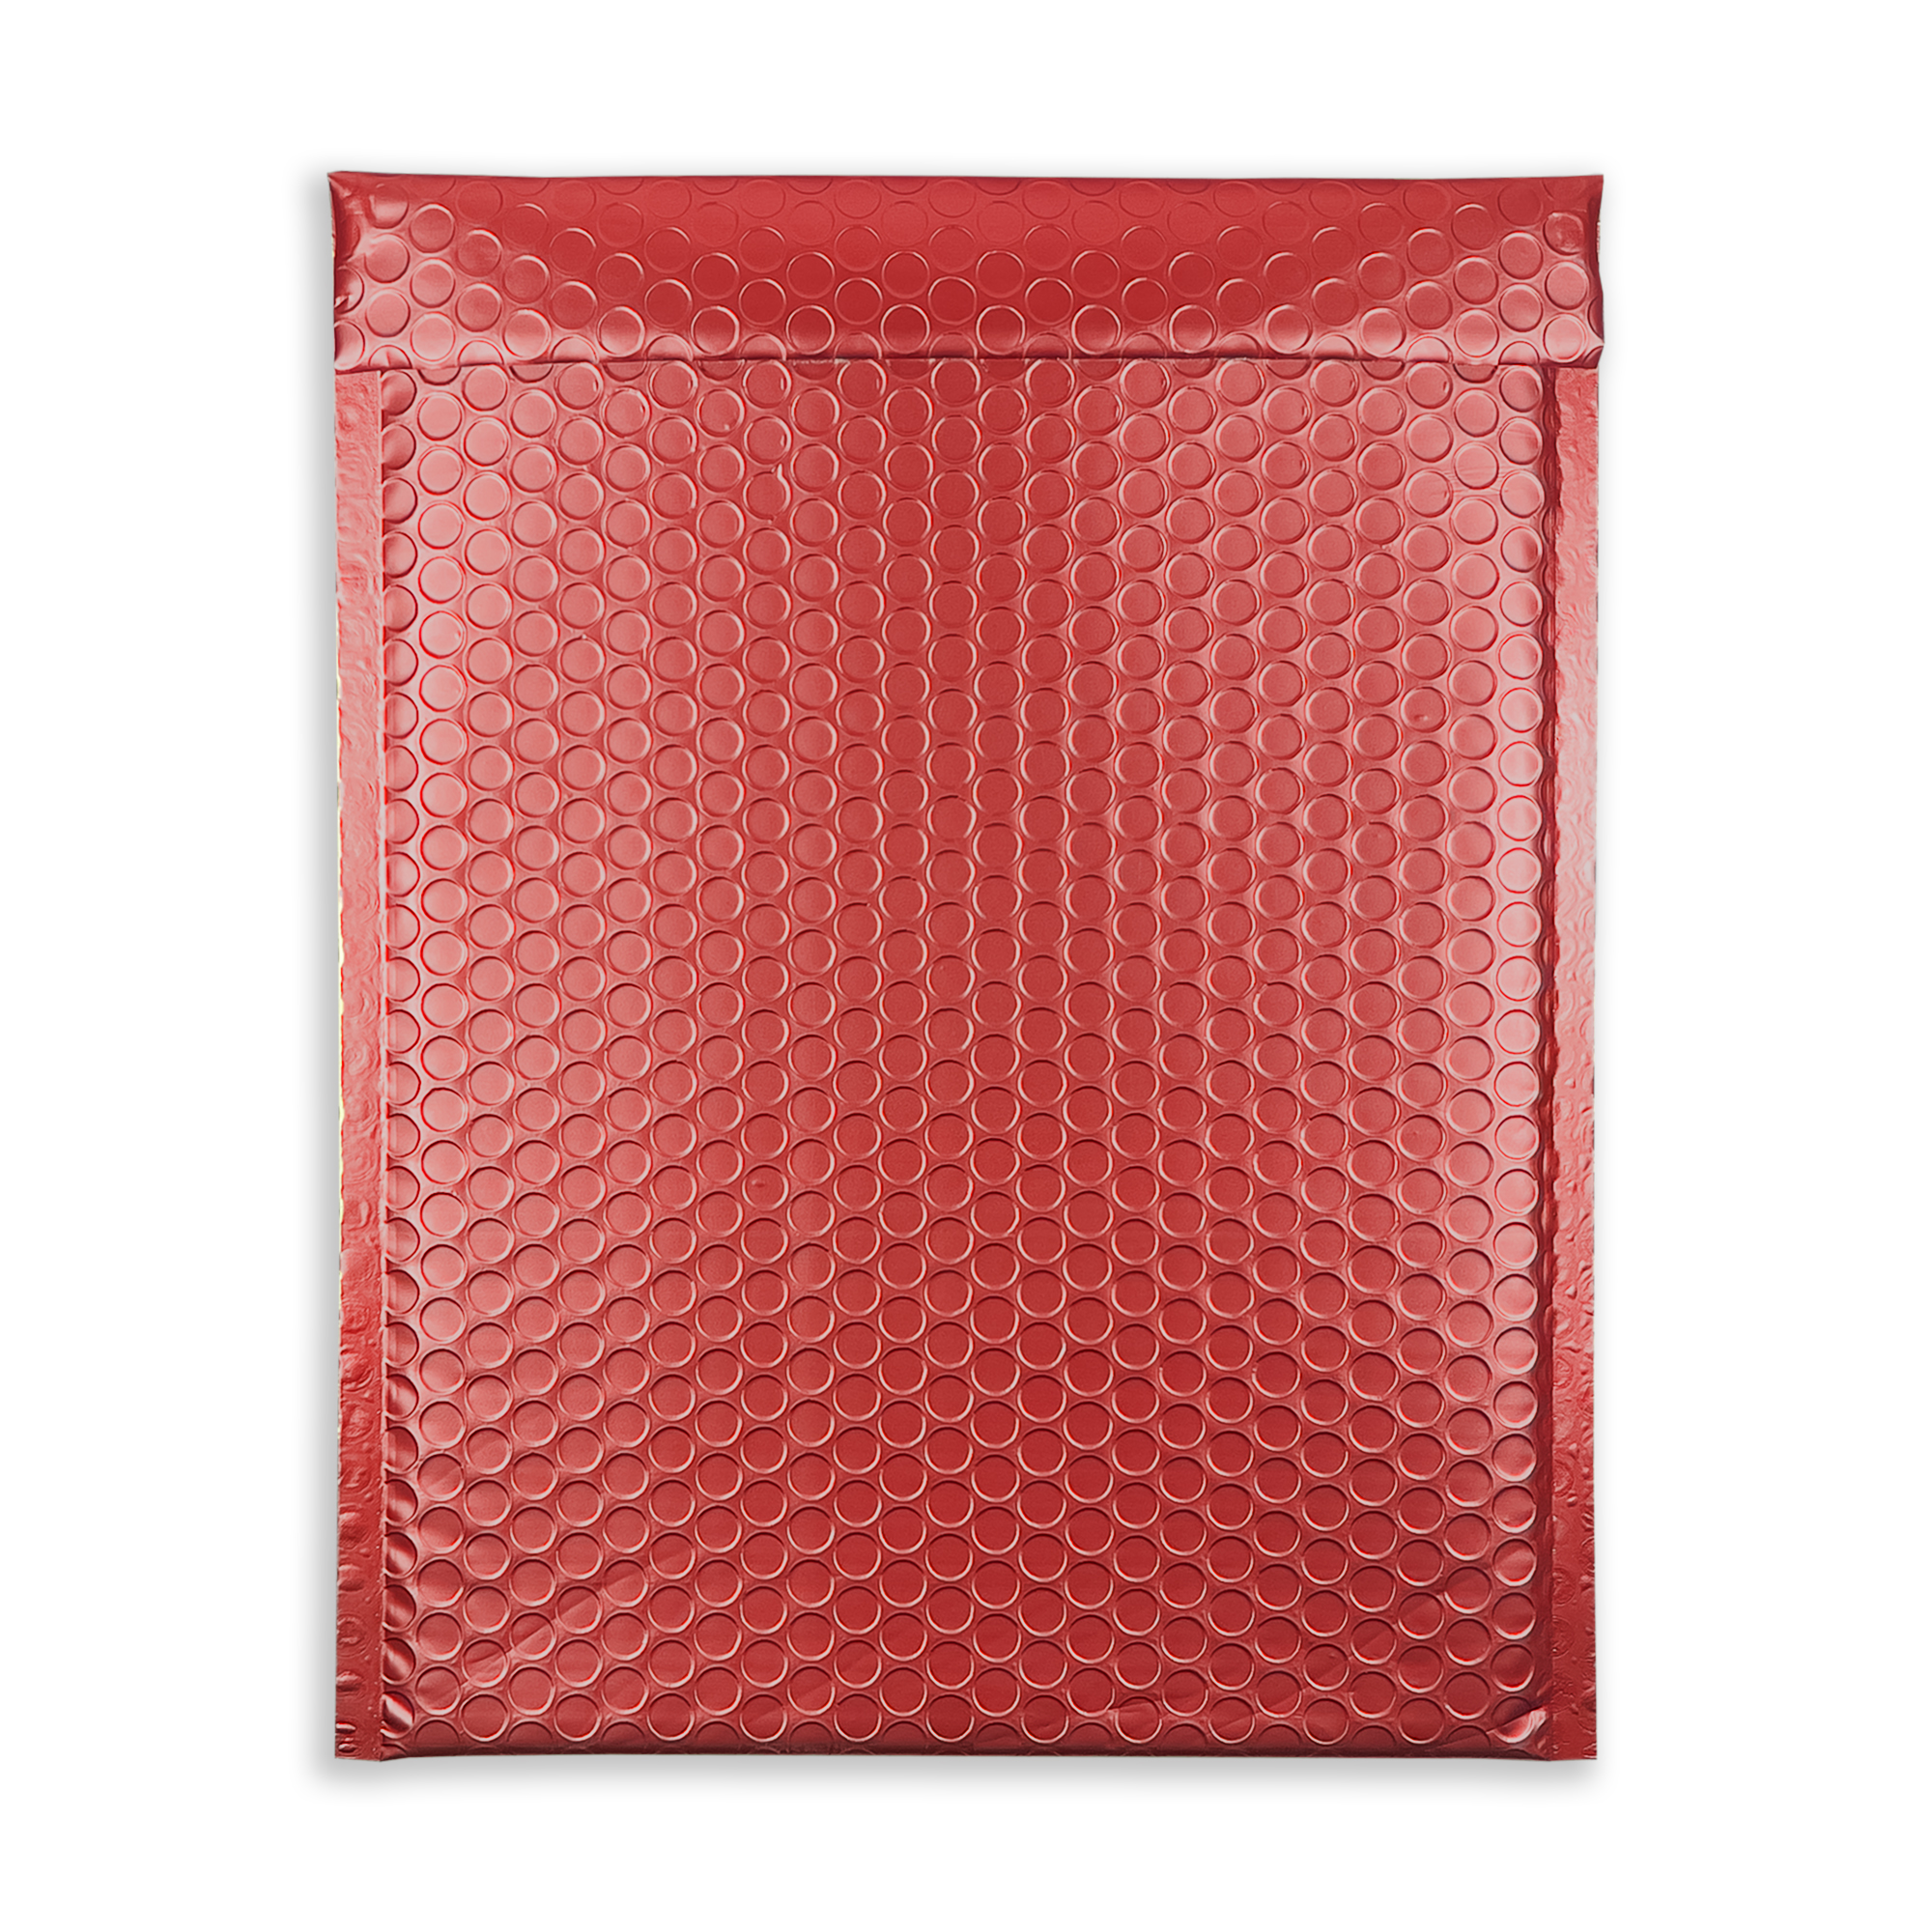 pillar-box-red-bubble-padded-envelopes-matt-rectangle-flap-closed